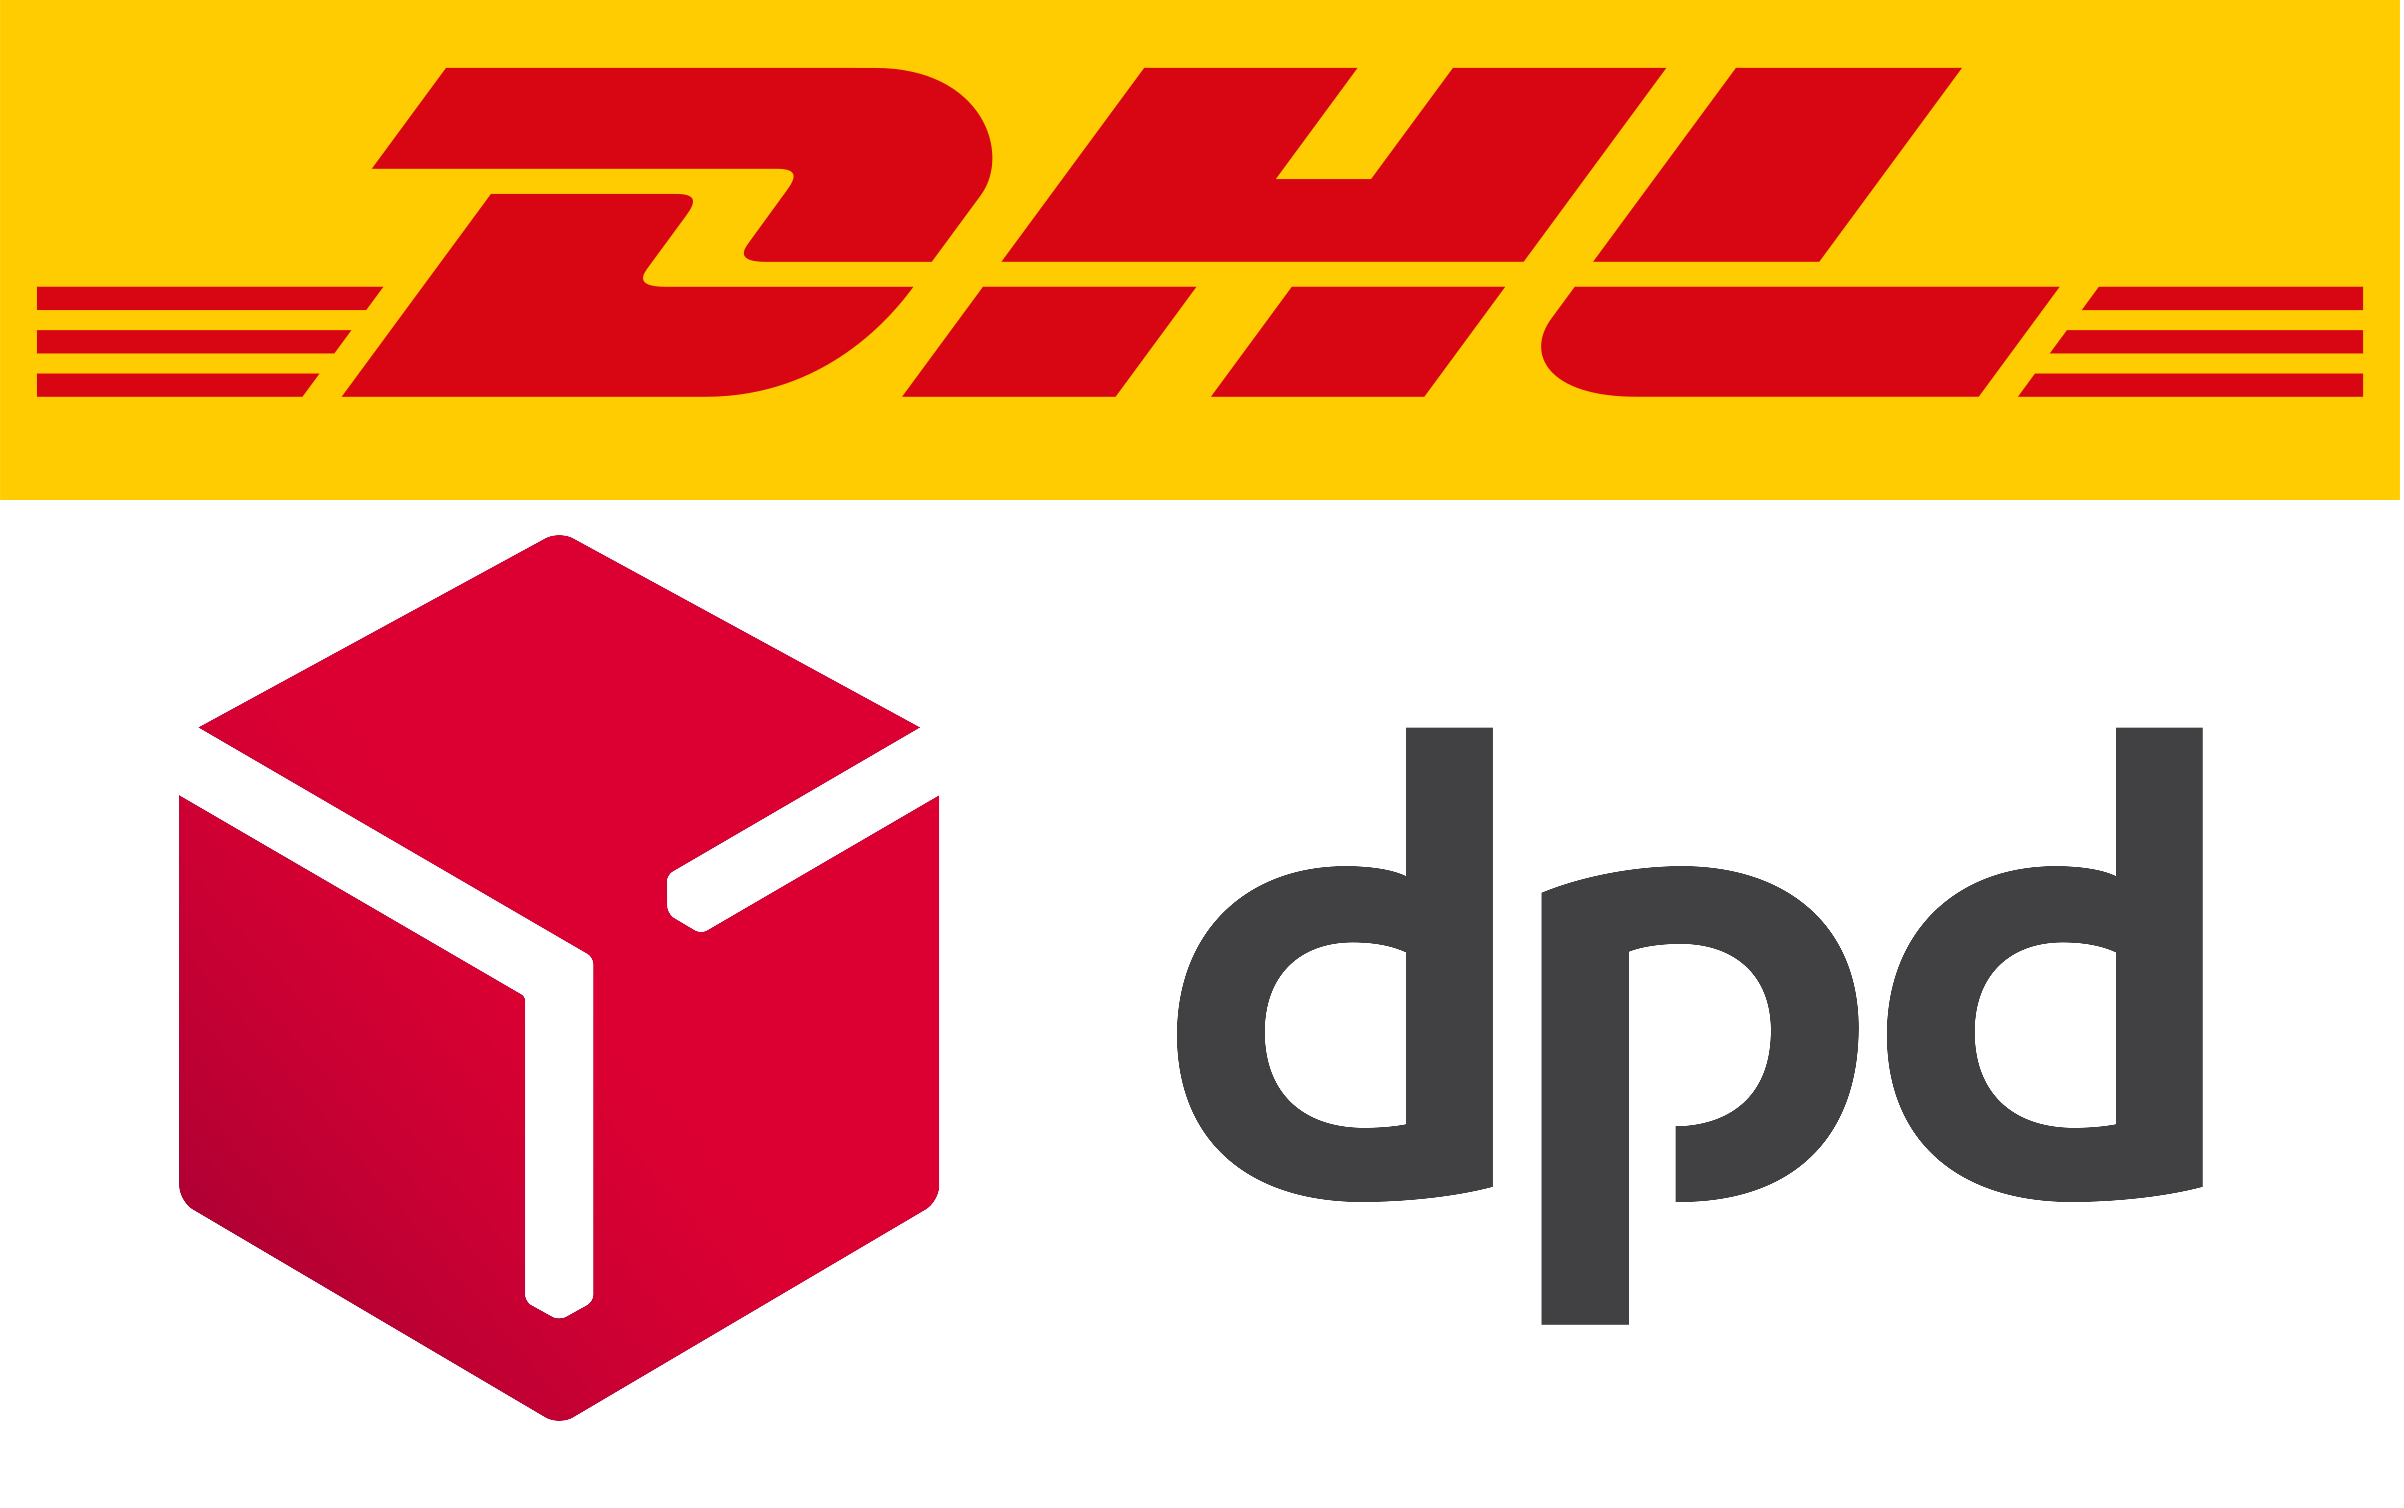 Kurier - DHL, DPD